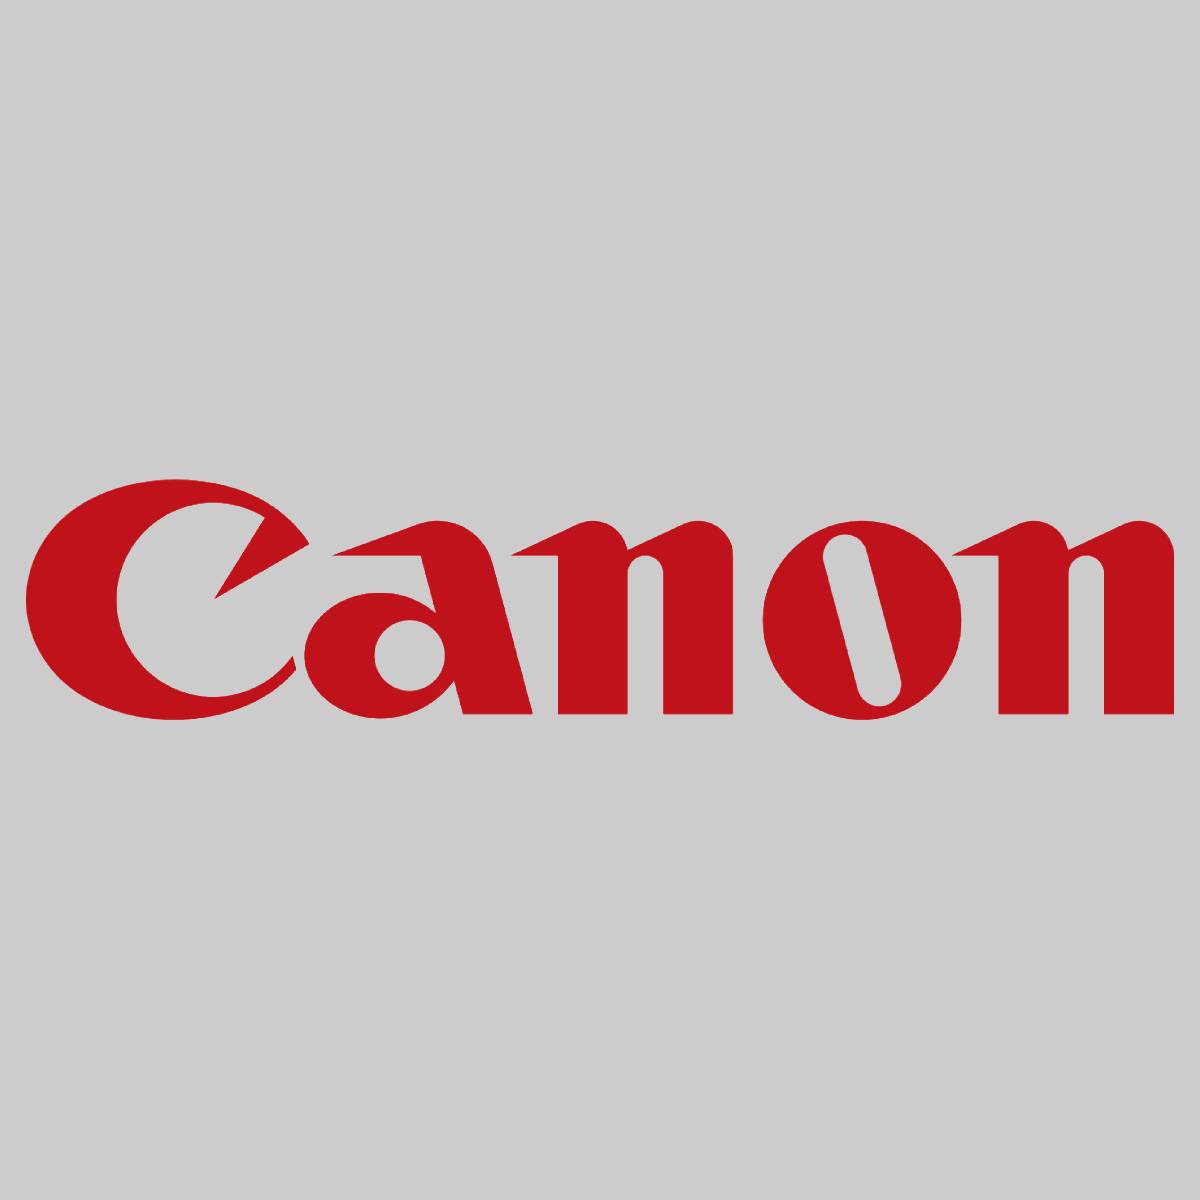 "Original Canon Developer Yellow Assembly FM4-8351-000 imageRUNNER ADV C5030